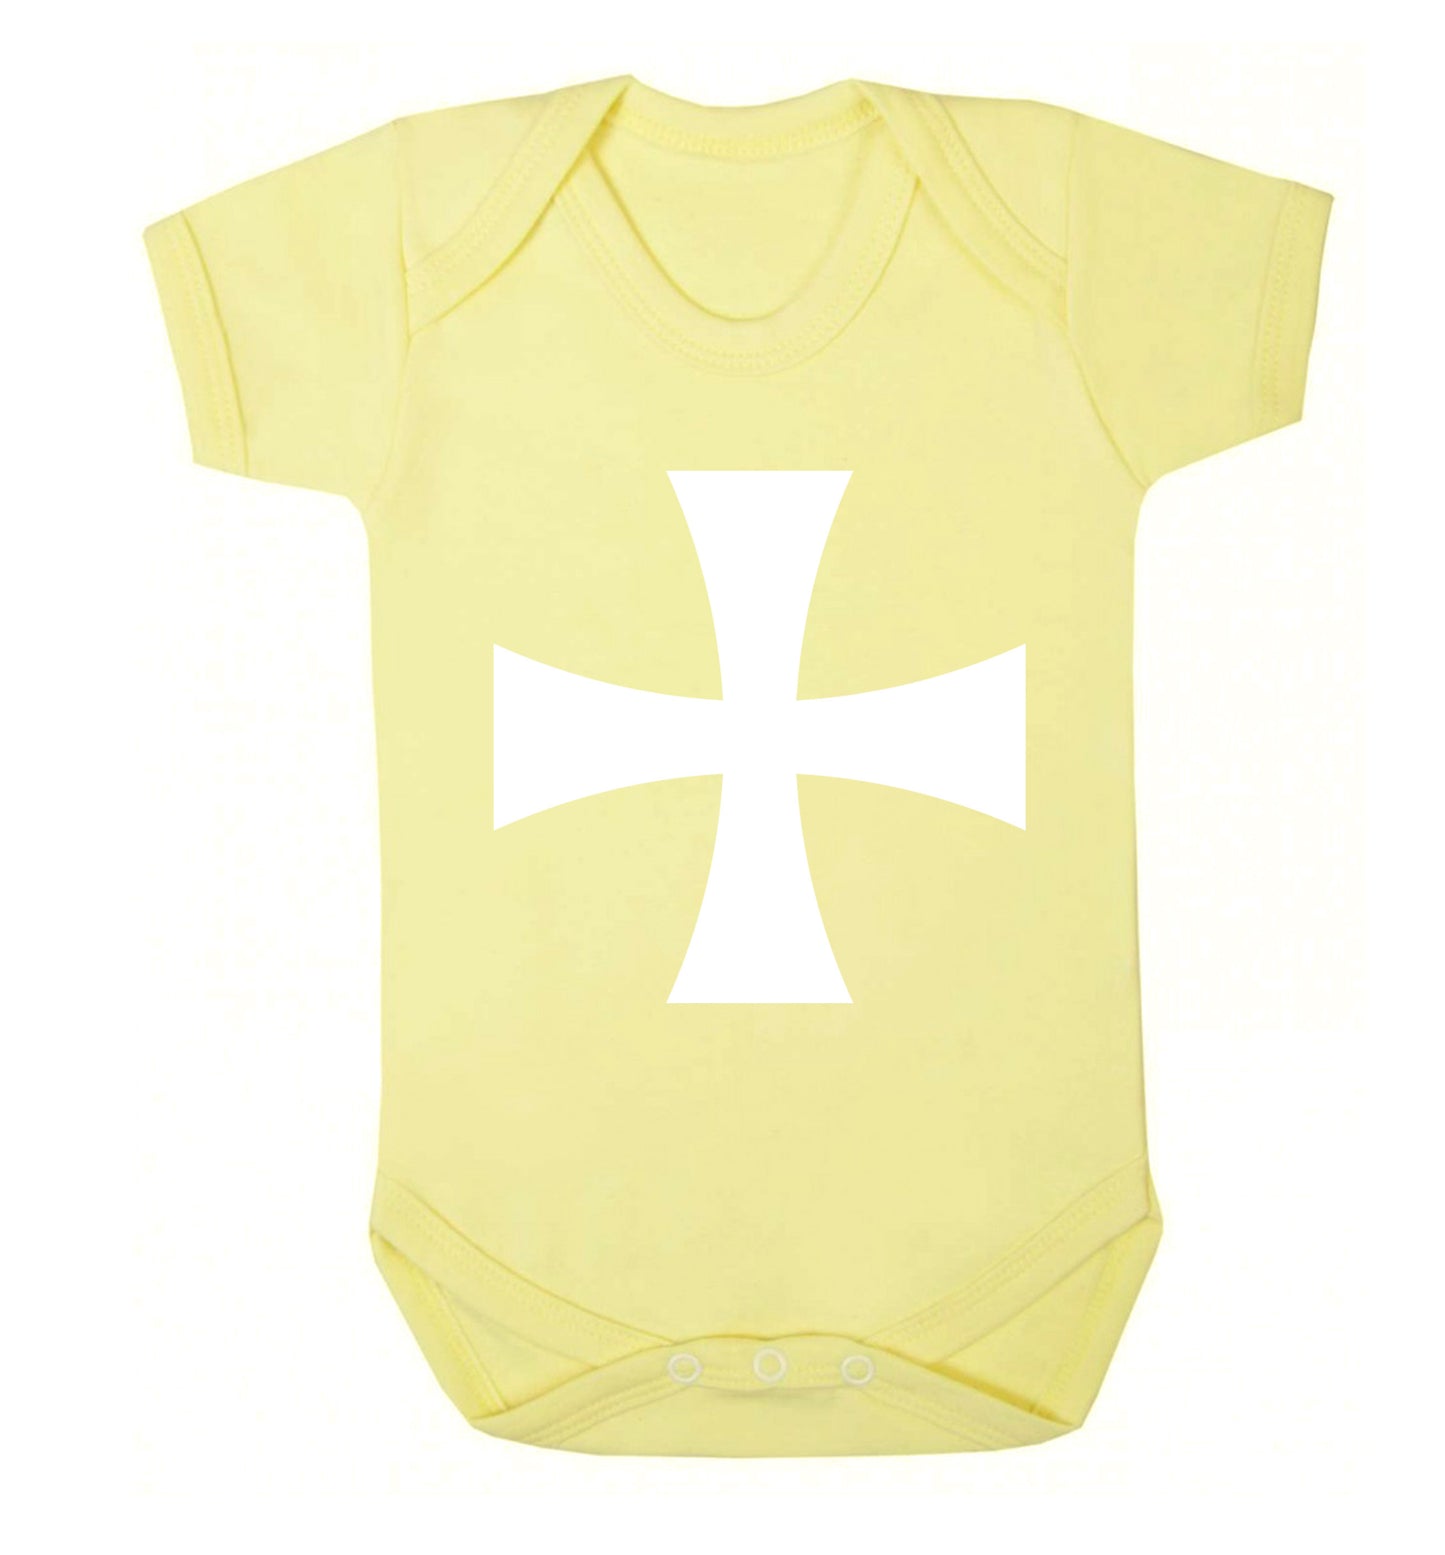 Knights Templar cross Baby Vest pale yellow 18-24 months